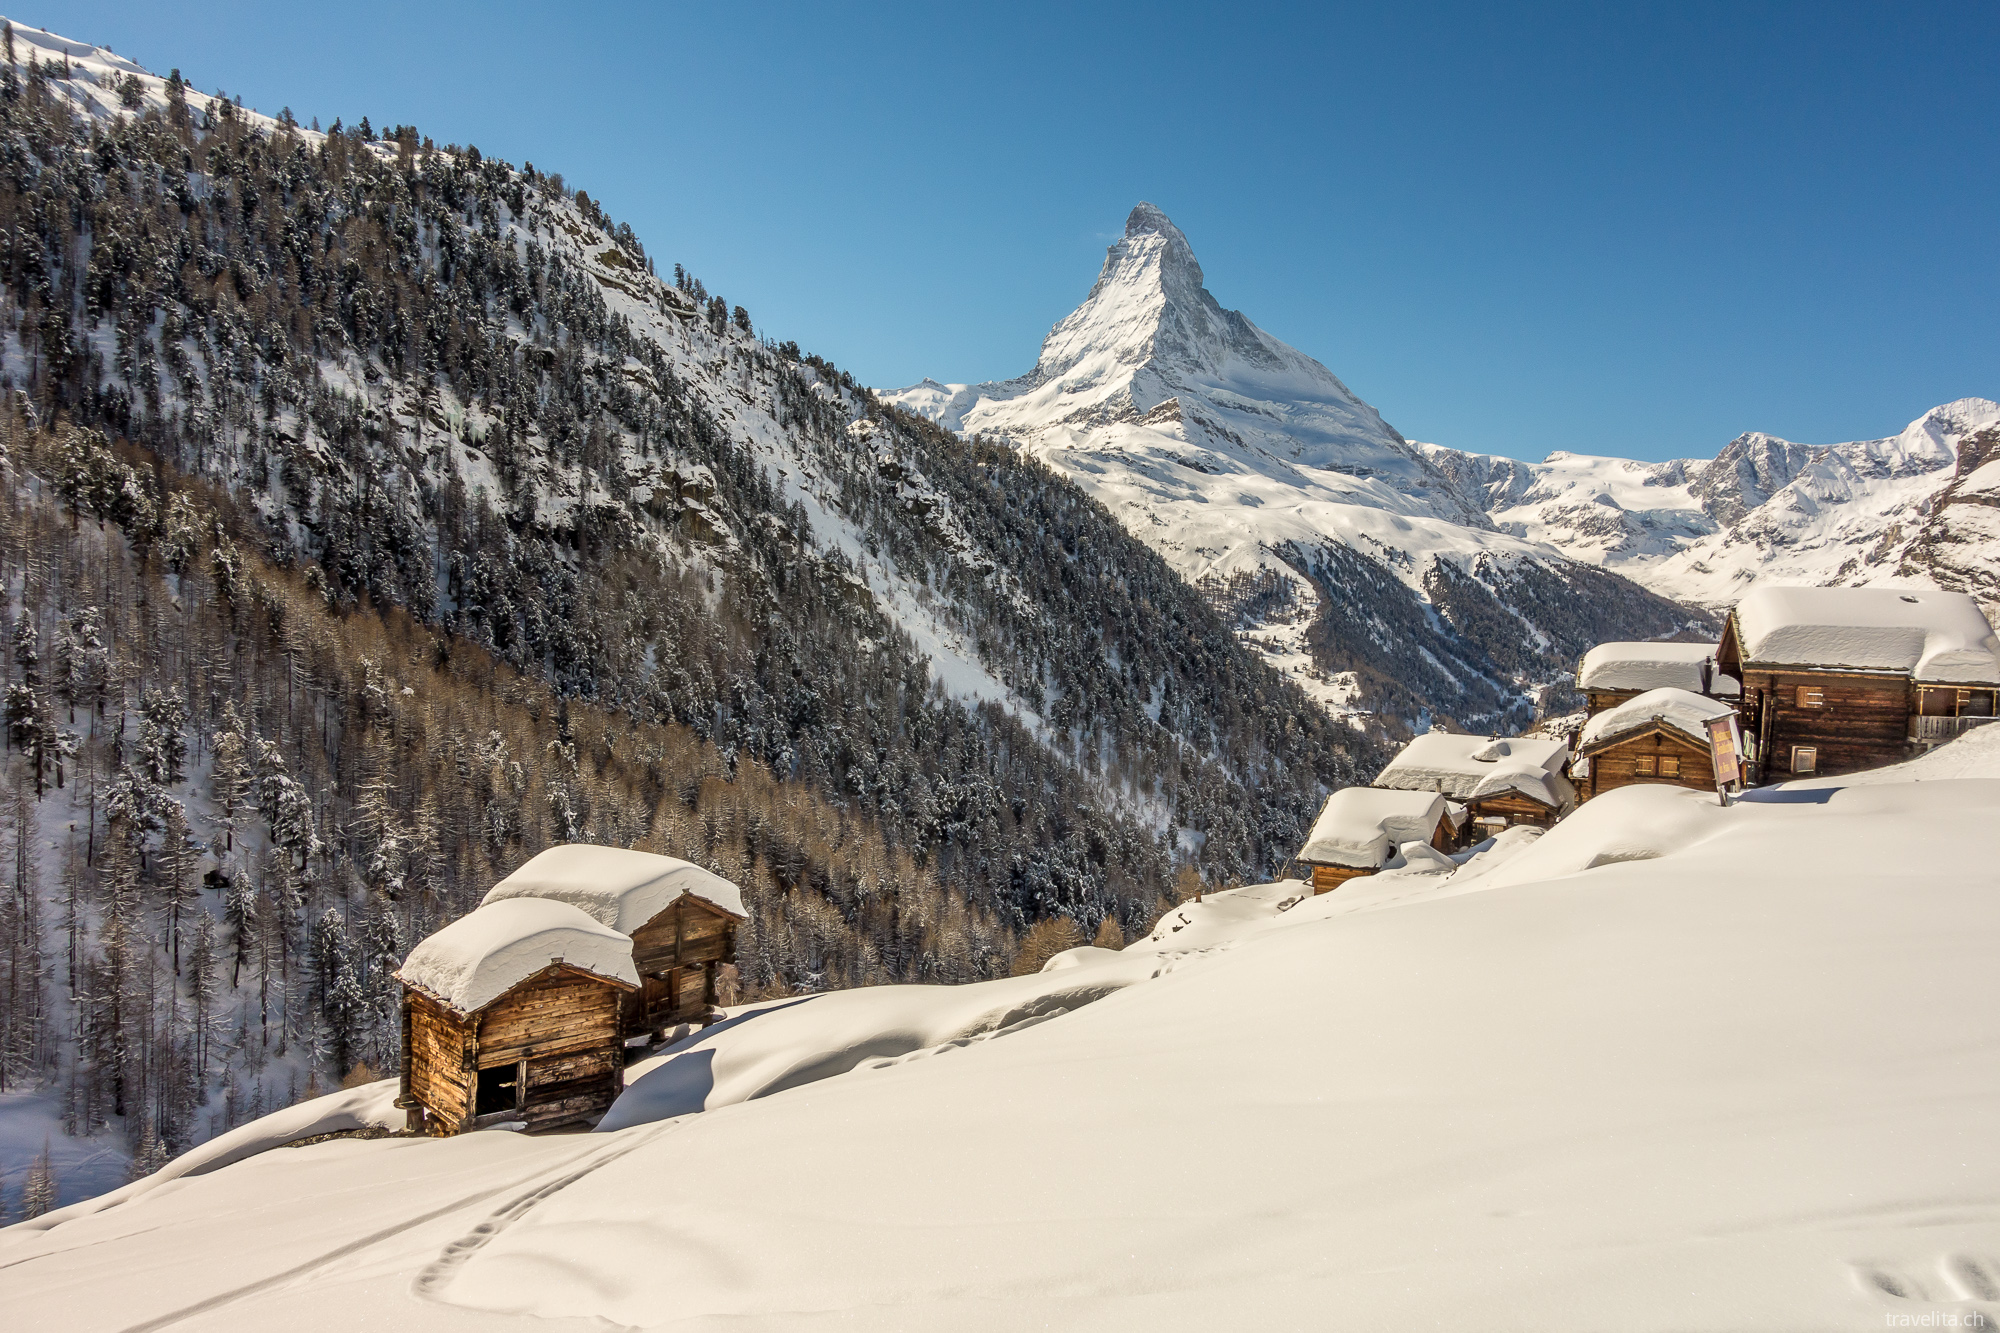 5 swiss ski resorts you shouldn't miss - Reisetipps